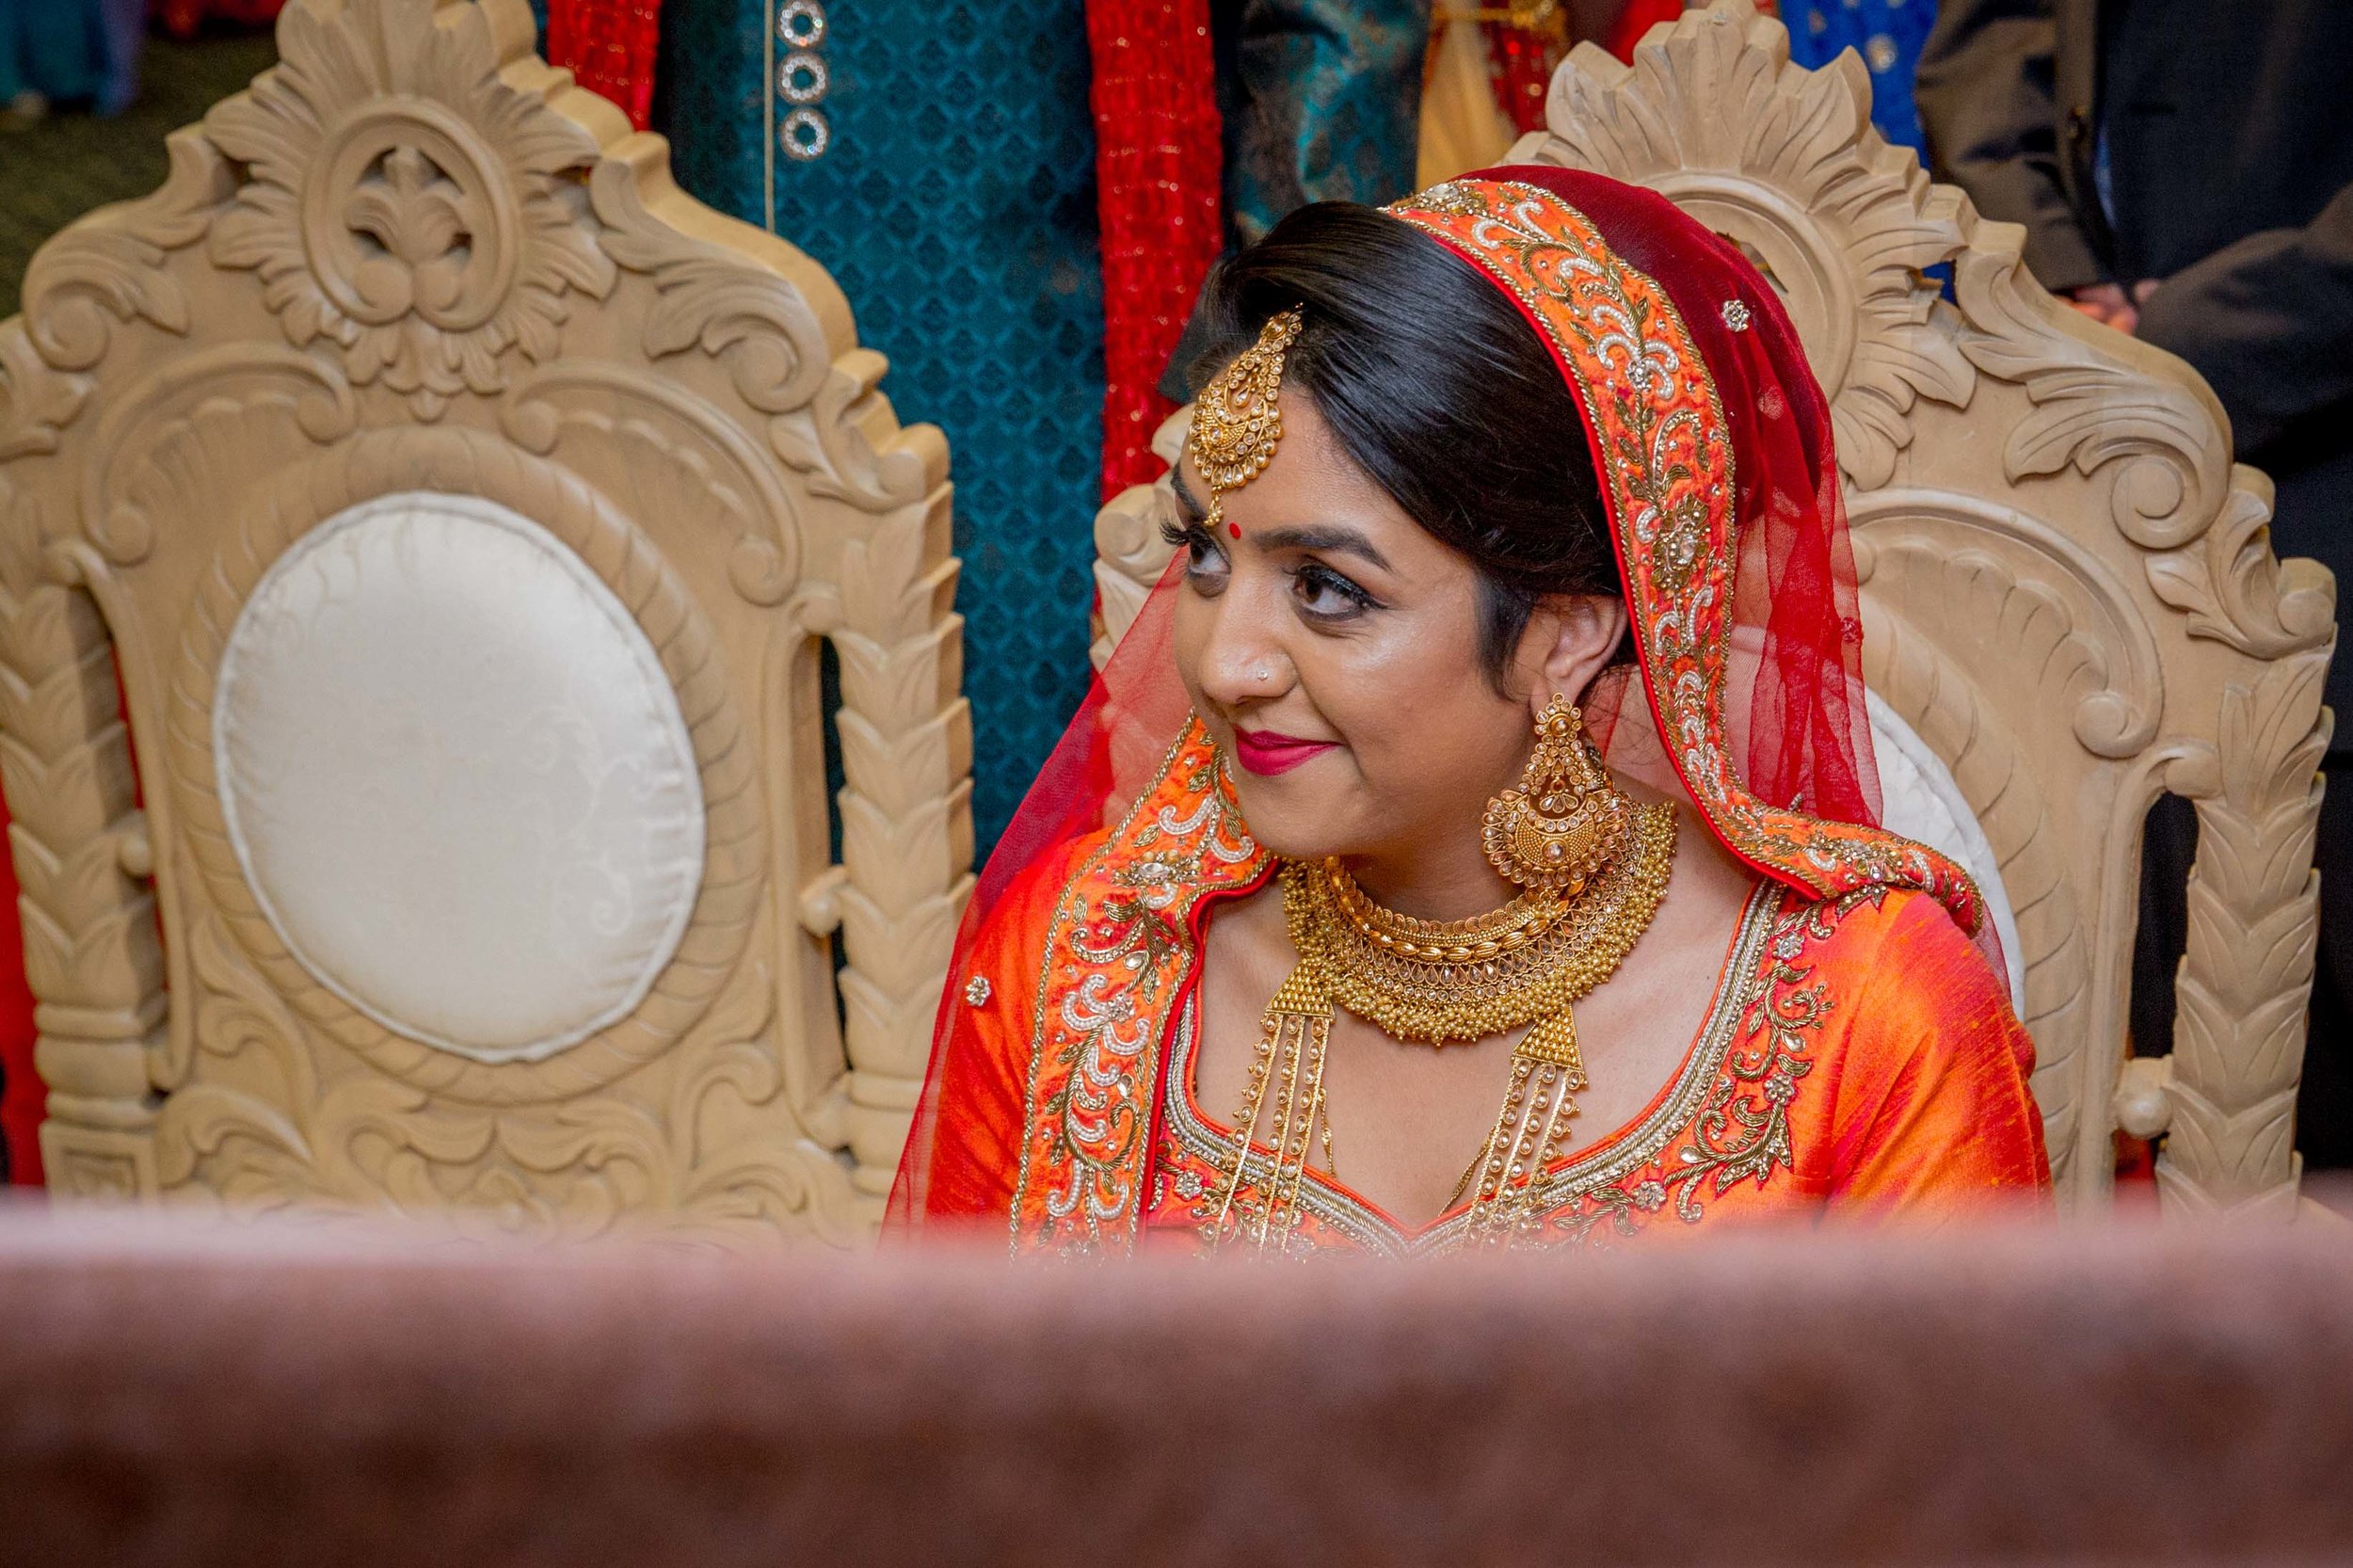 premier-banquetting-london-Hindu-asian-wedding-photographer-natalia-smith-photography-17.jpg